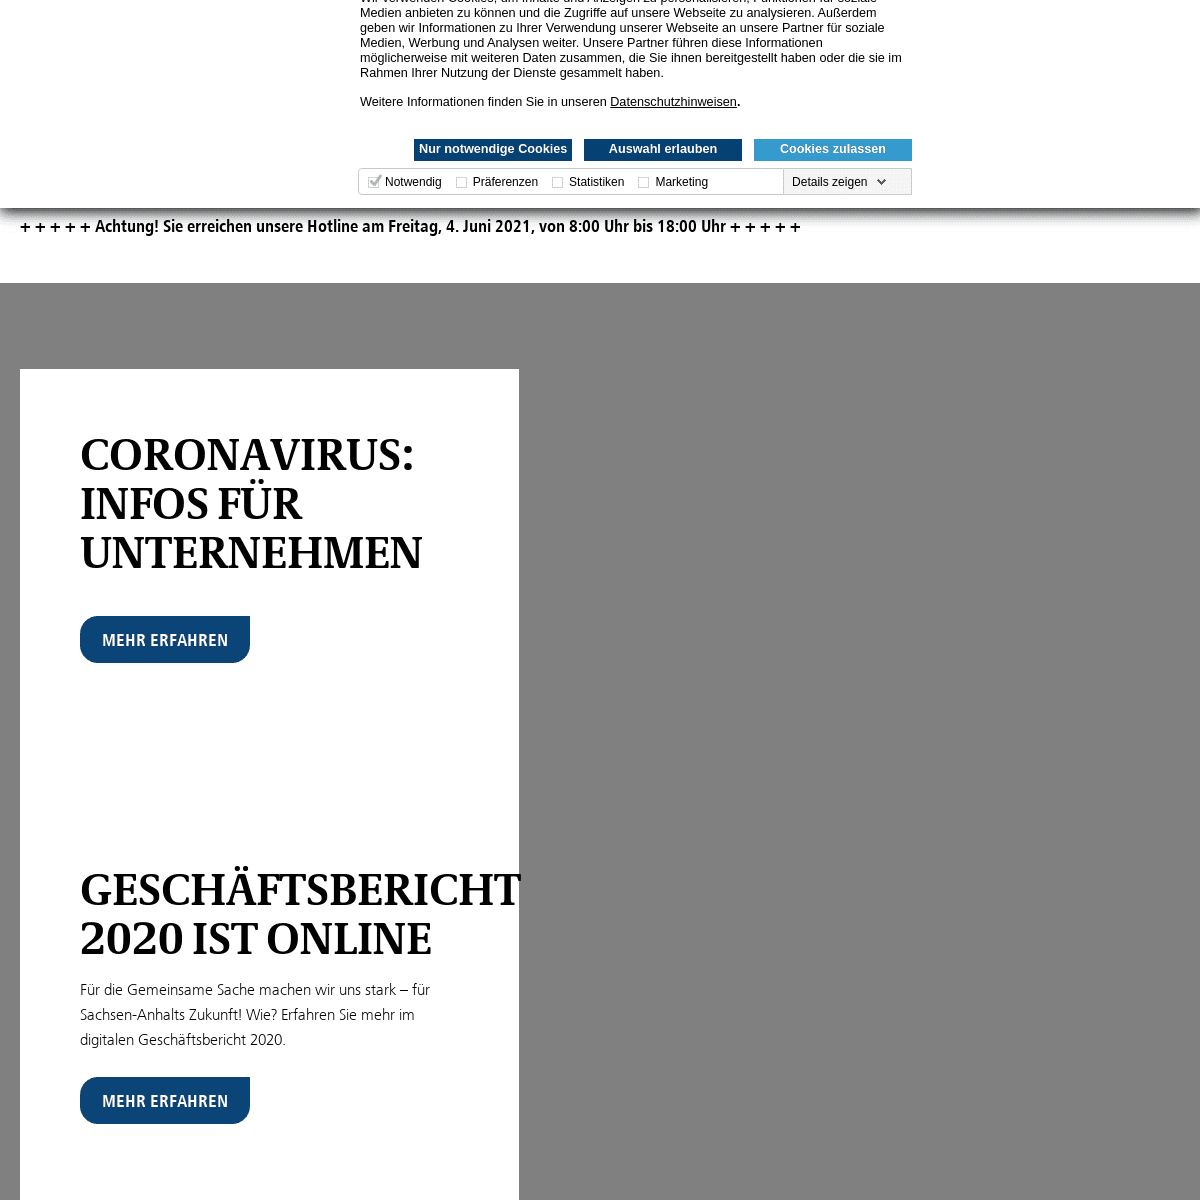 A complete backup of https://ib-sachsen-anhalt.de